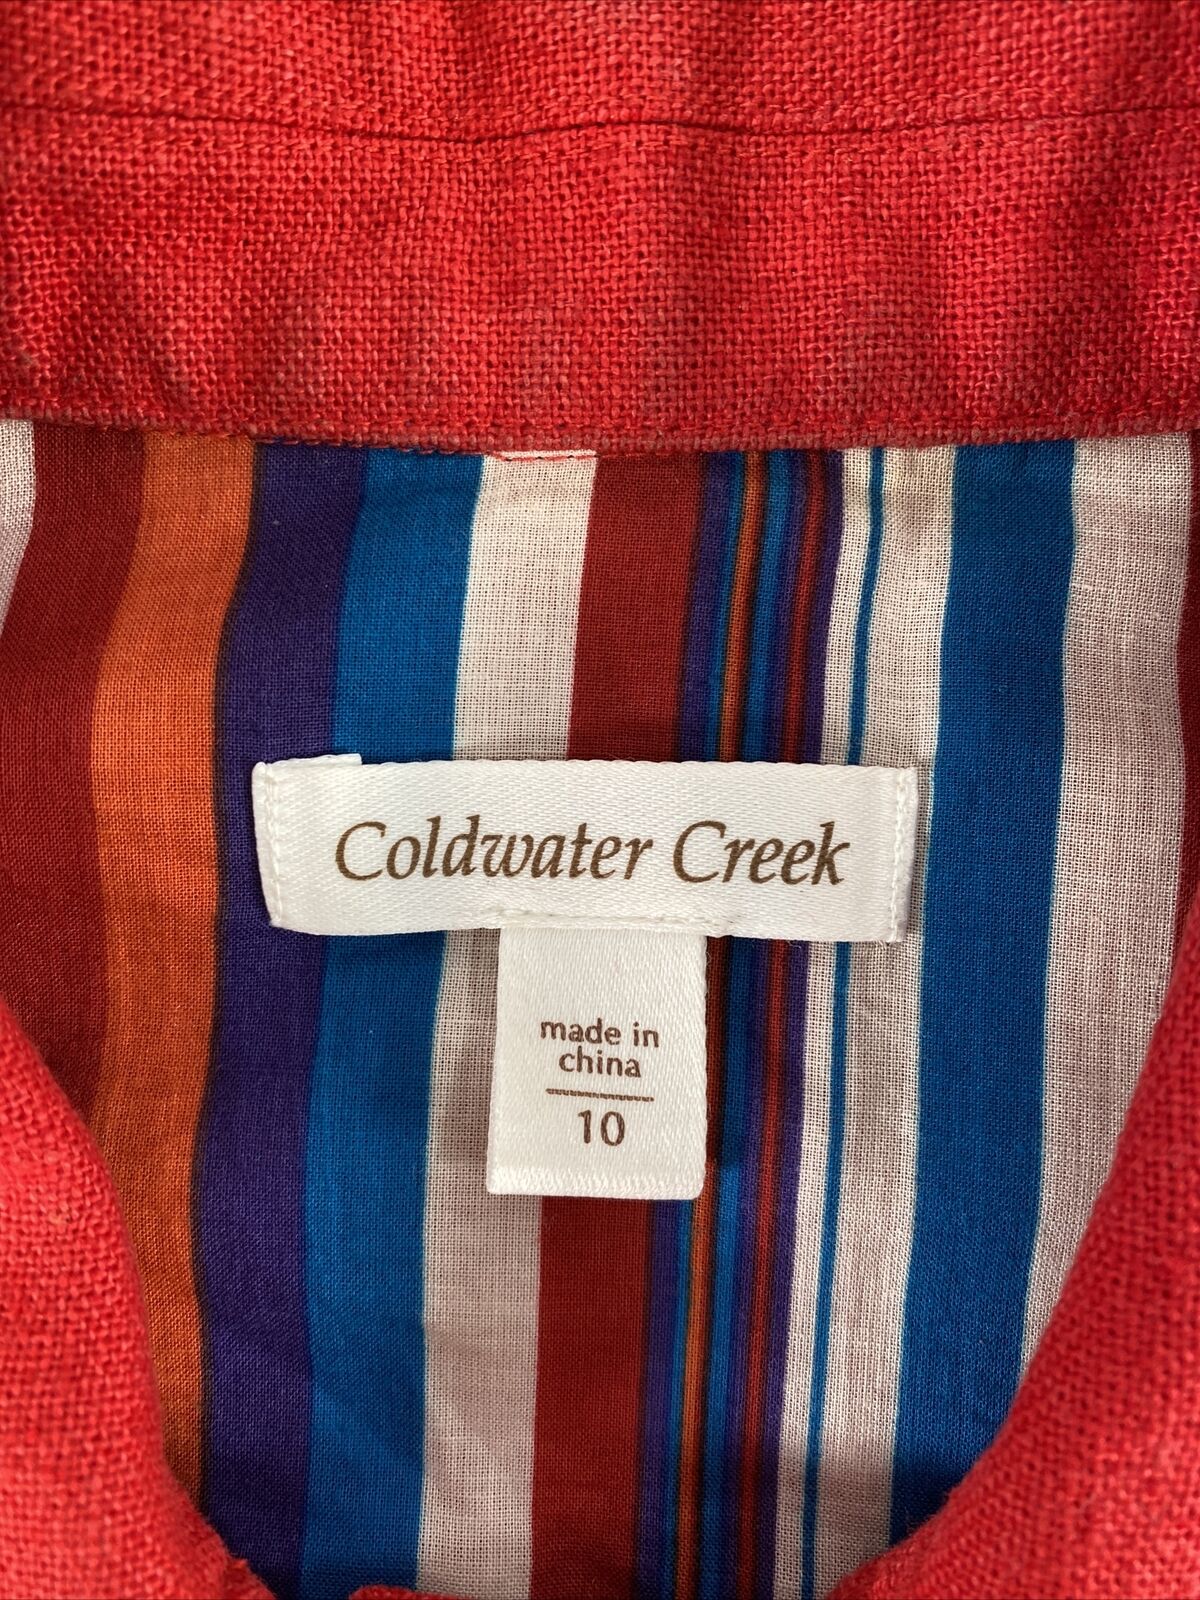 Coldwater Creek Women's Red Linen Short Sleeve Button Up Jacket - 10